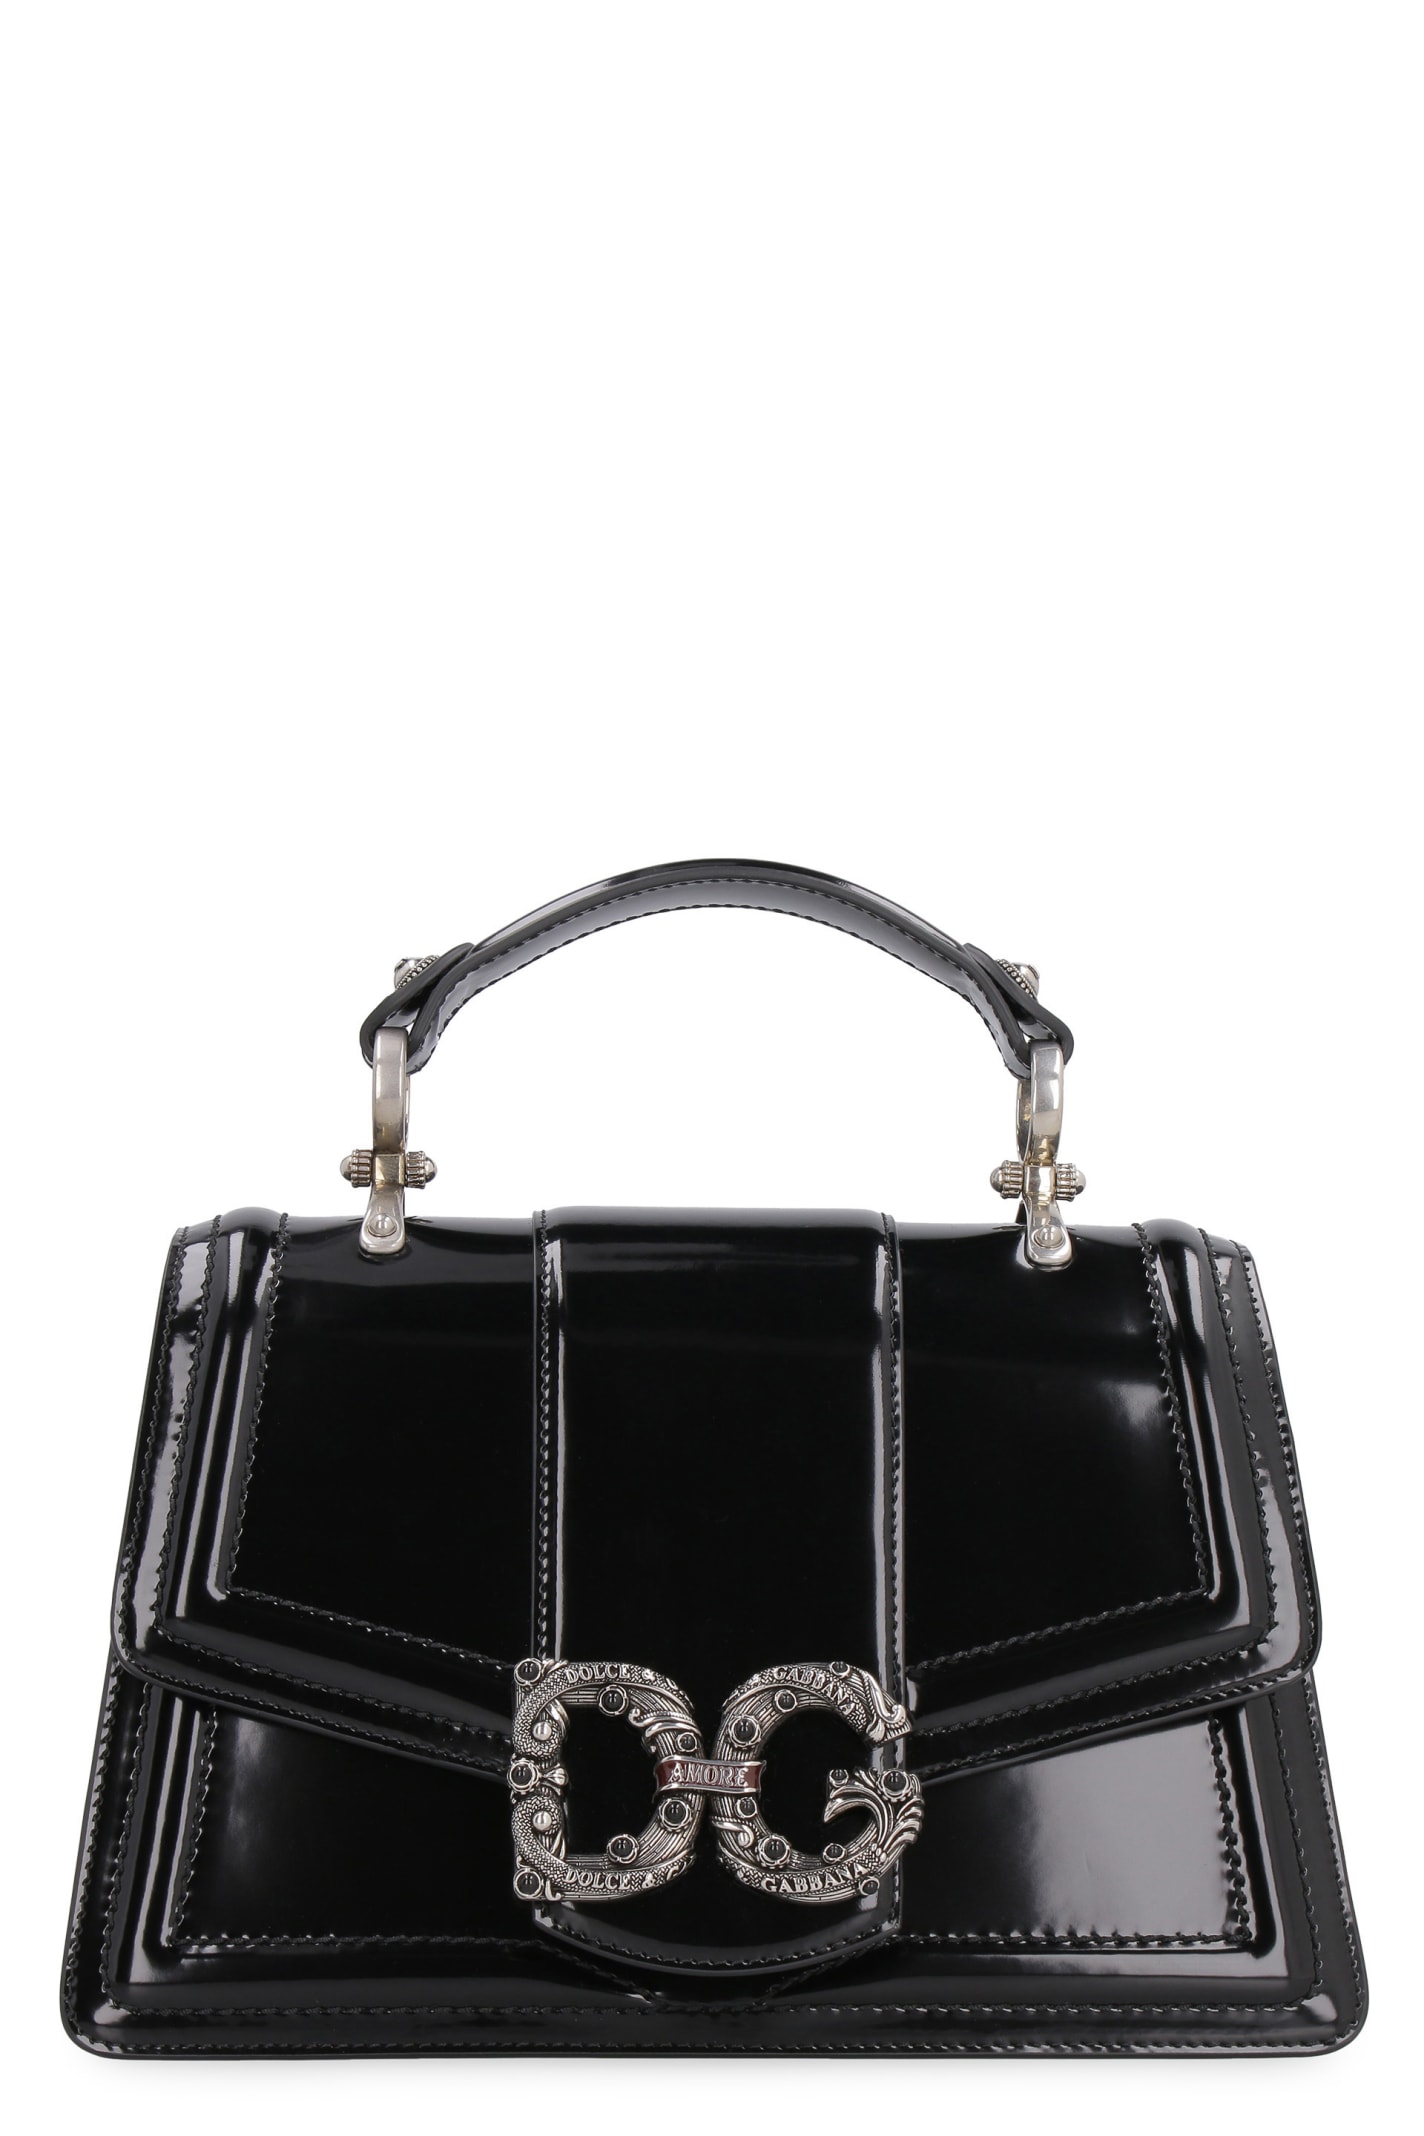 Dolce & Gabbana Dg Amore Leather Handbag